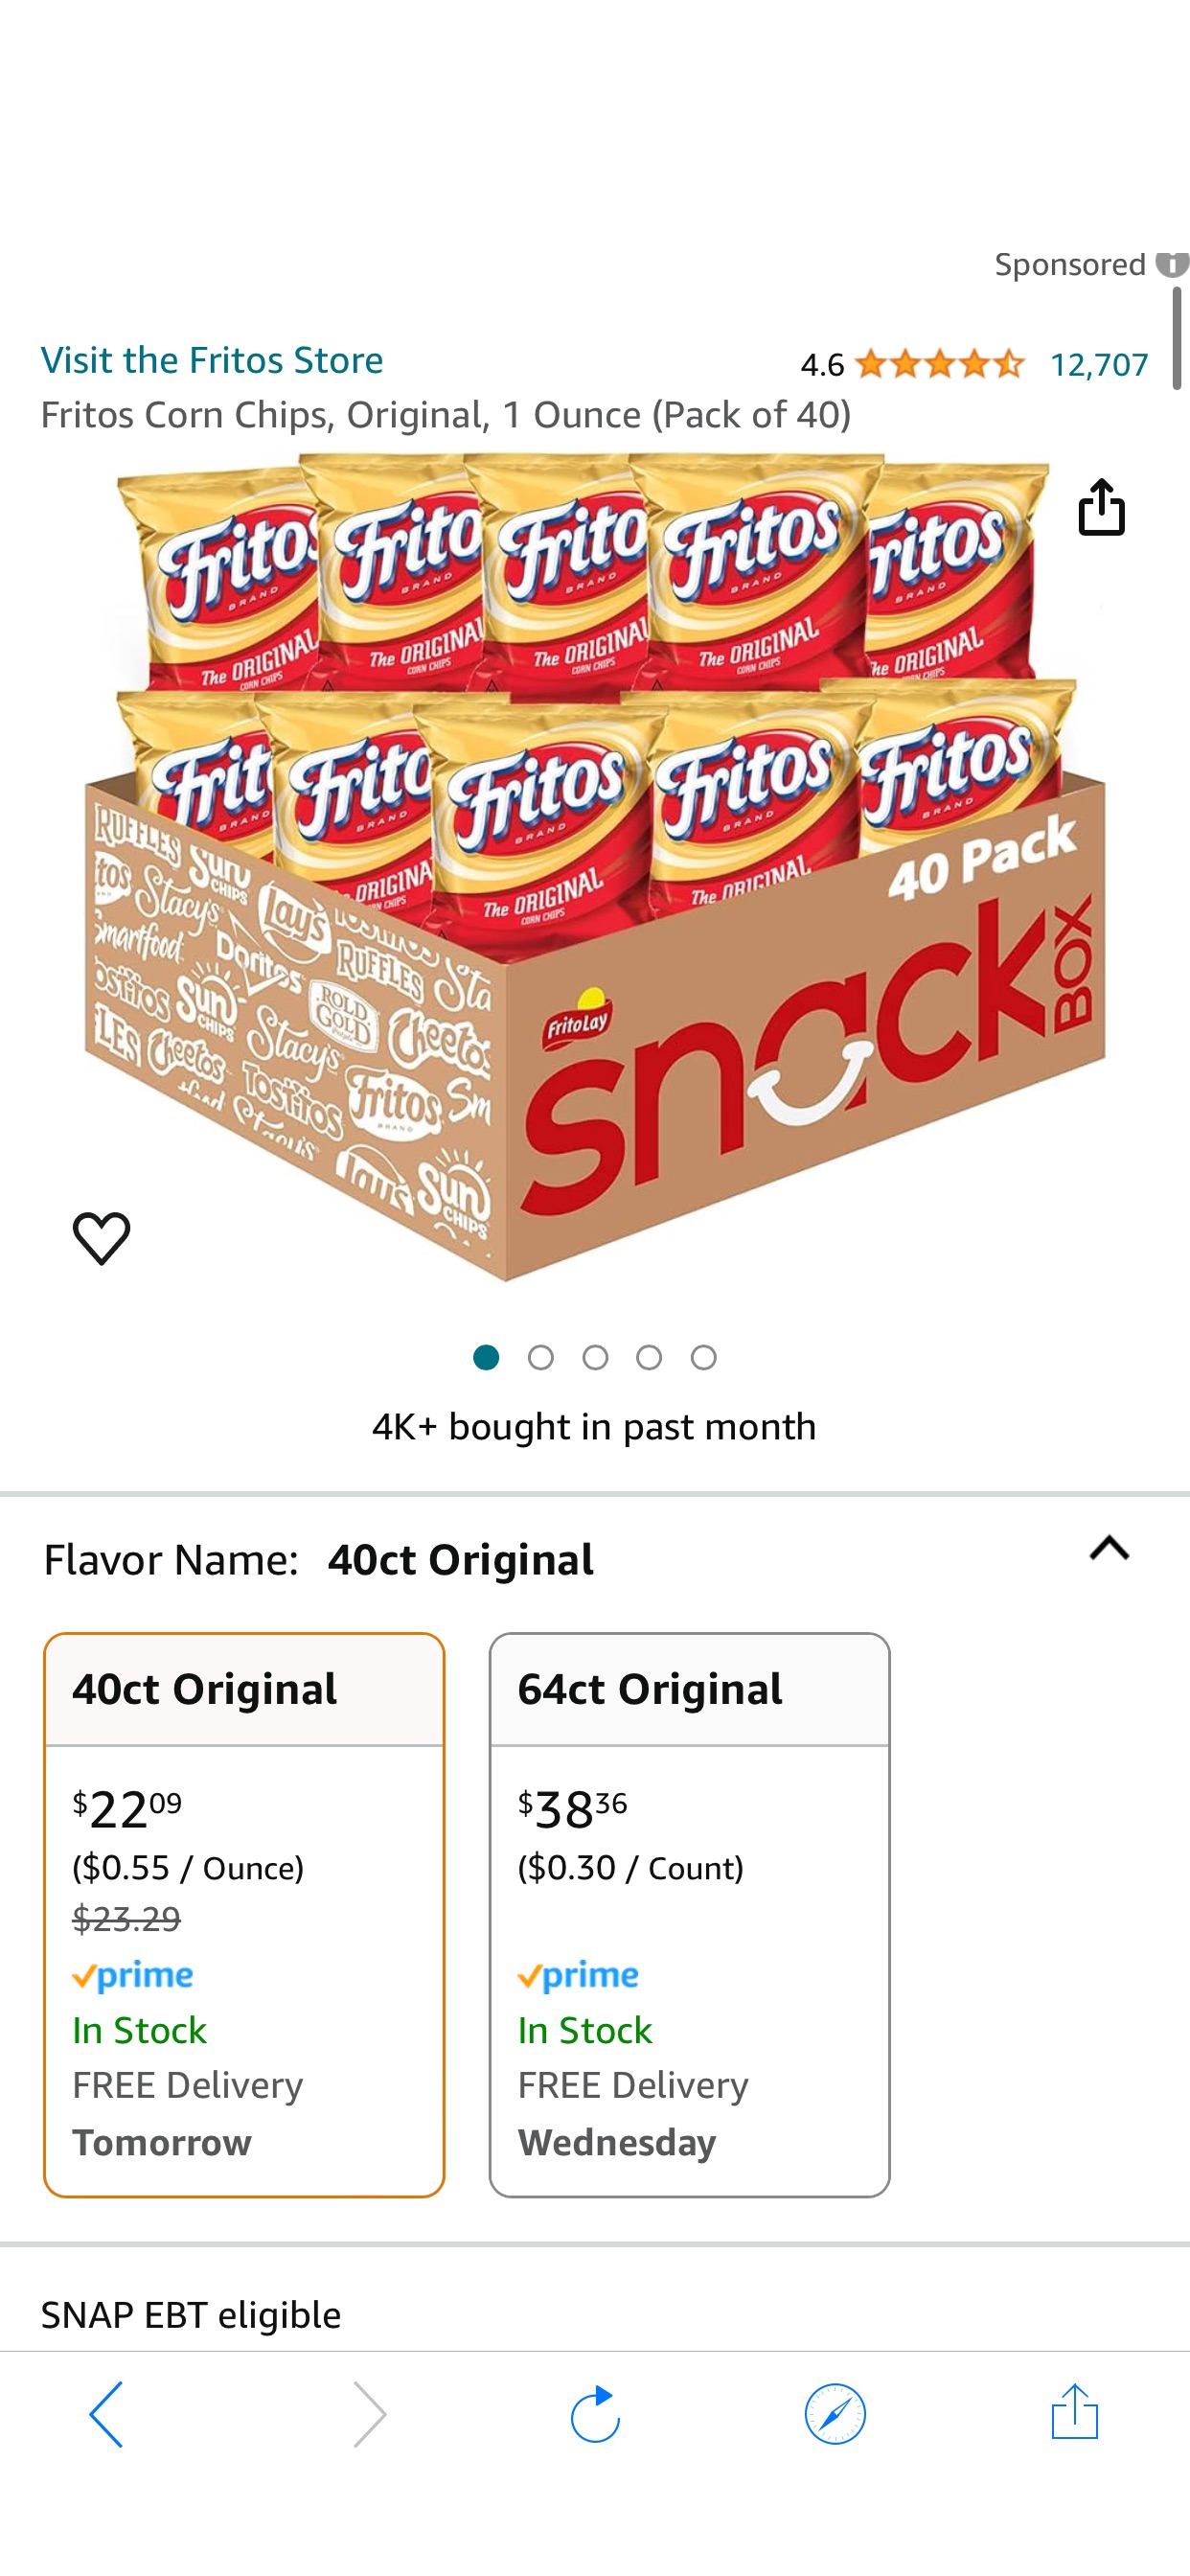 Amazon.com: Fritos Corn Chips, Original, 1 Ounce (Pack of 40) 玉米薯片